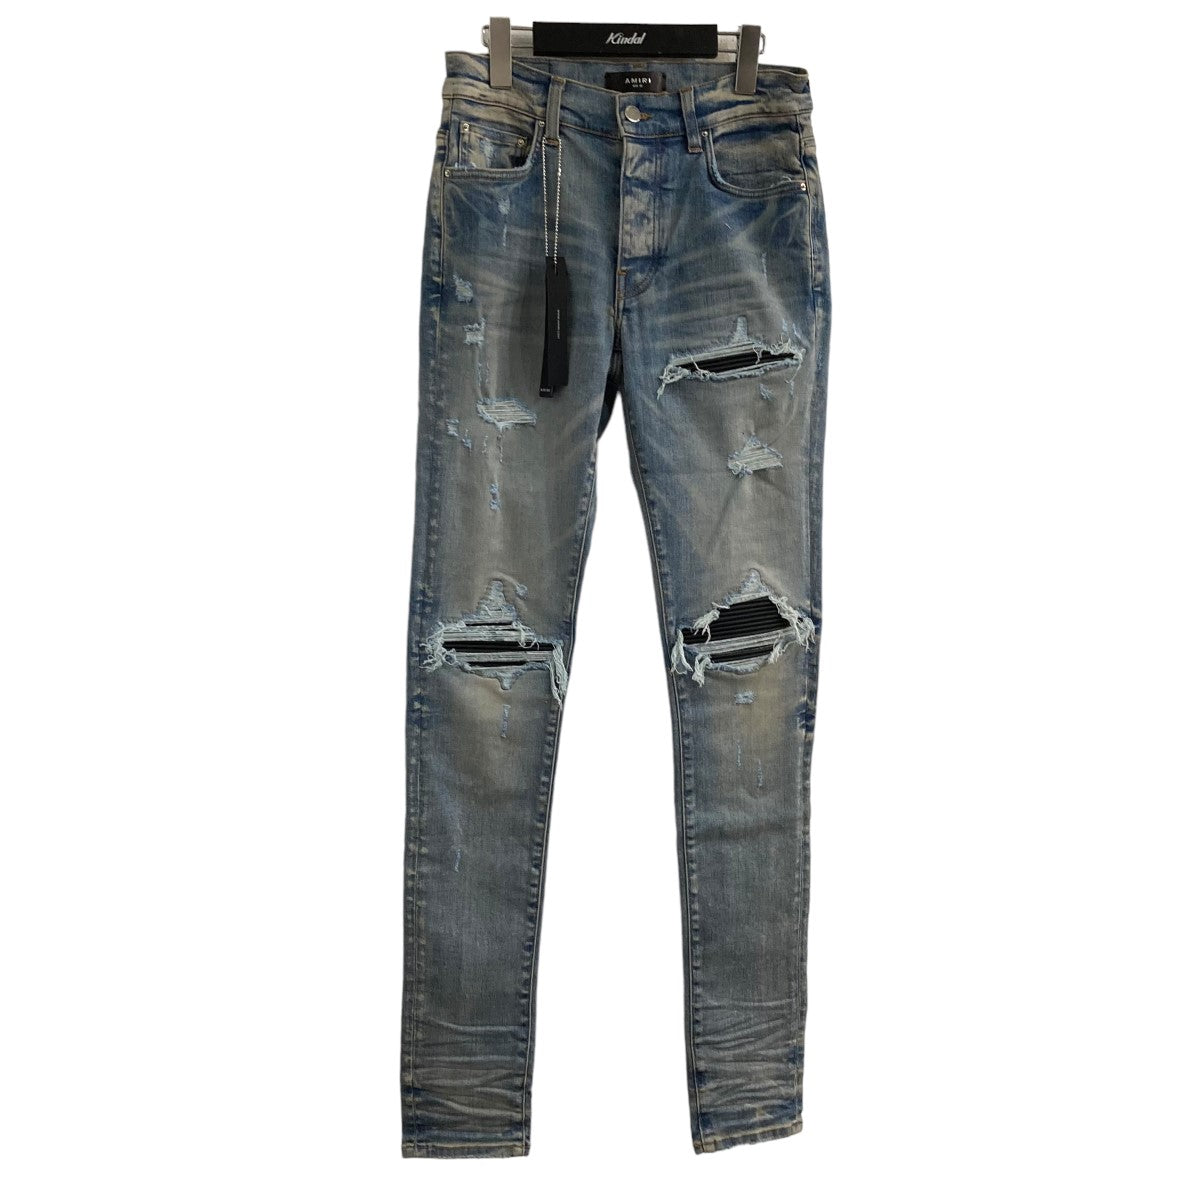 AMIRI(アミリ) 「MX1 408」「Leather Patch Jeans」デニムパンツ 